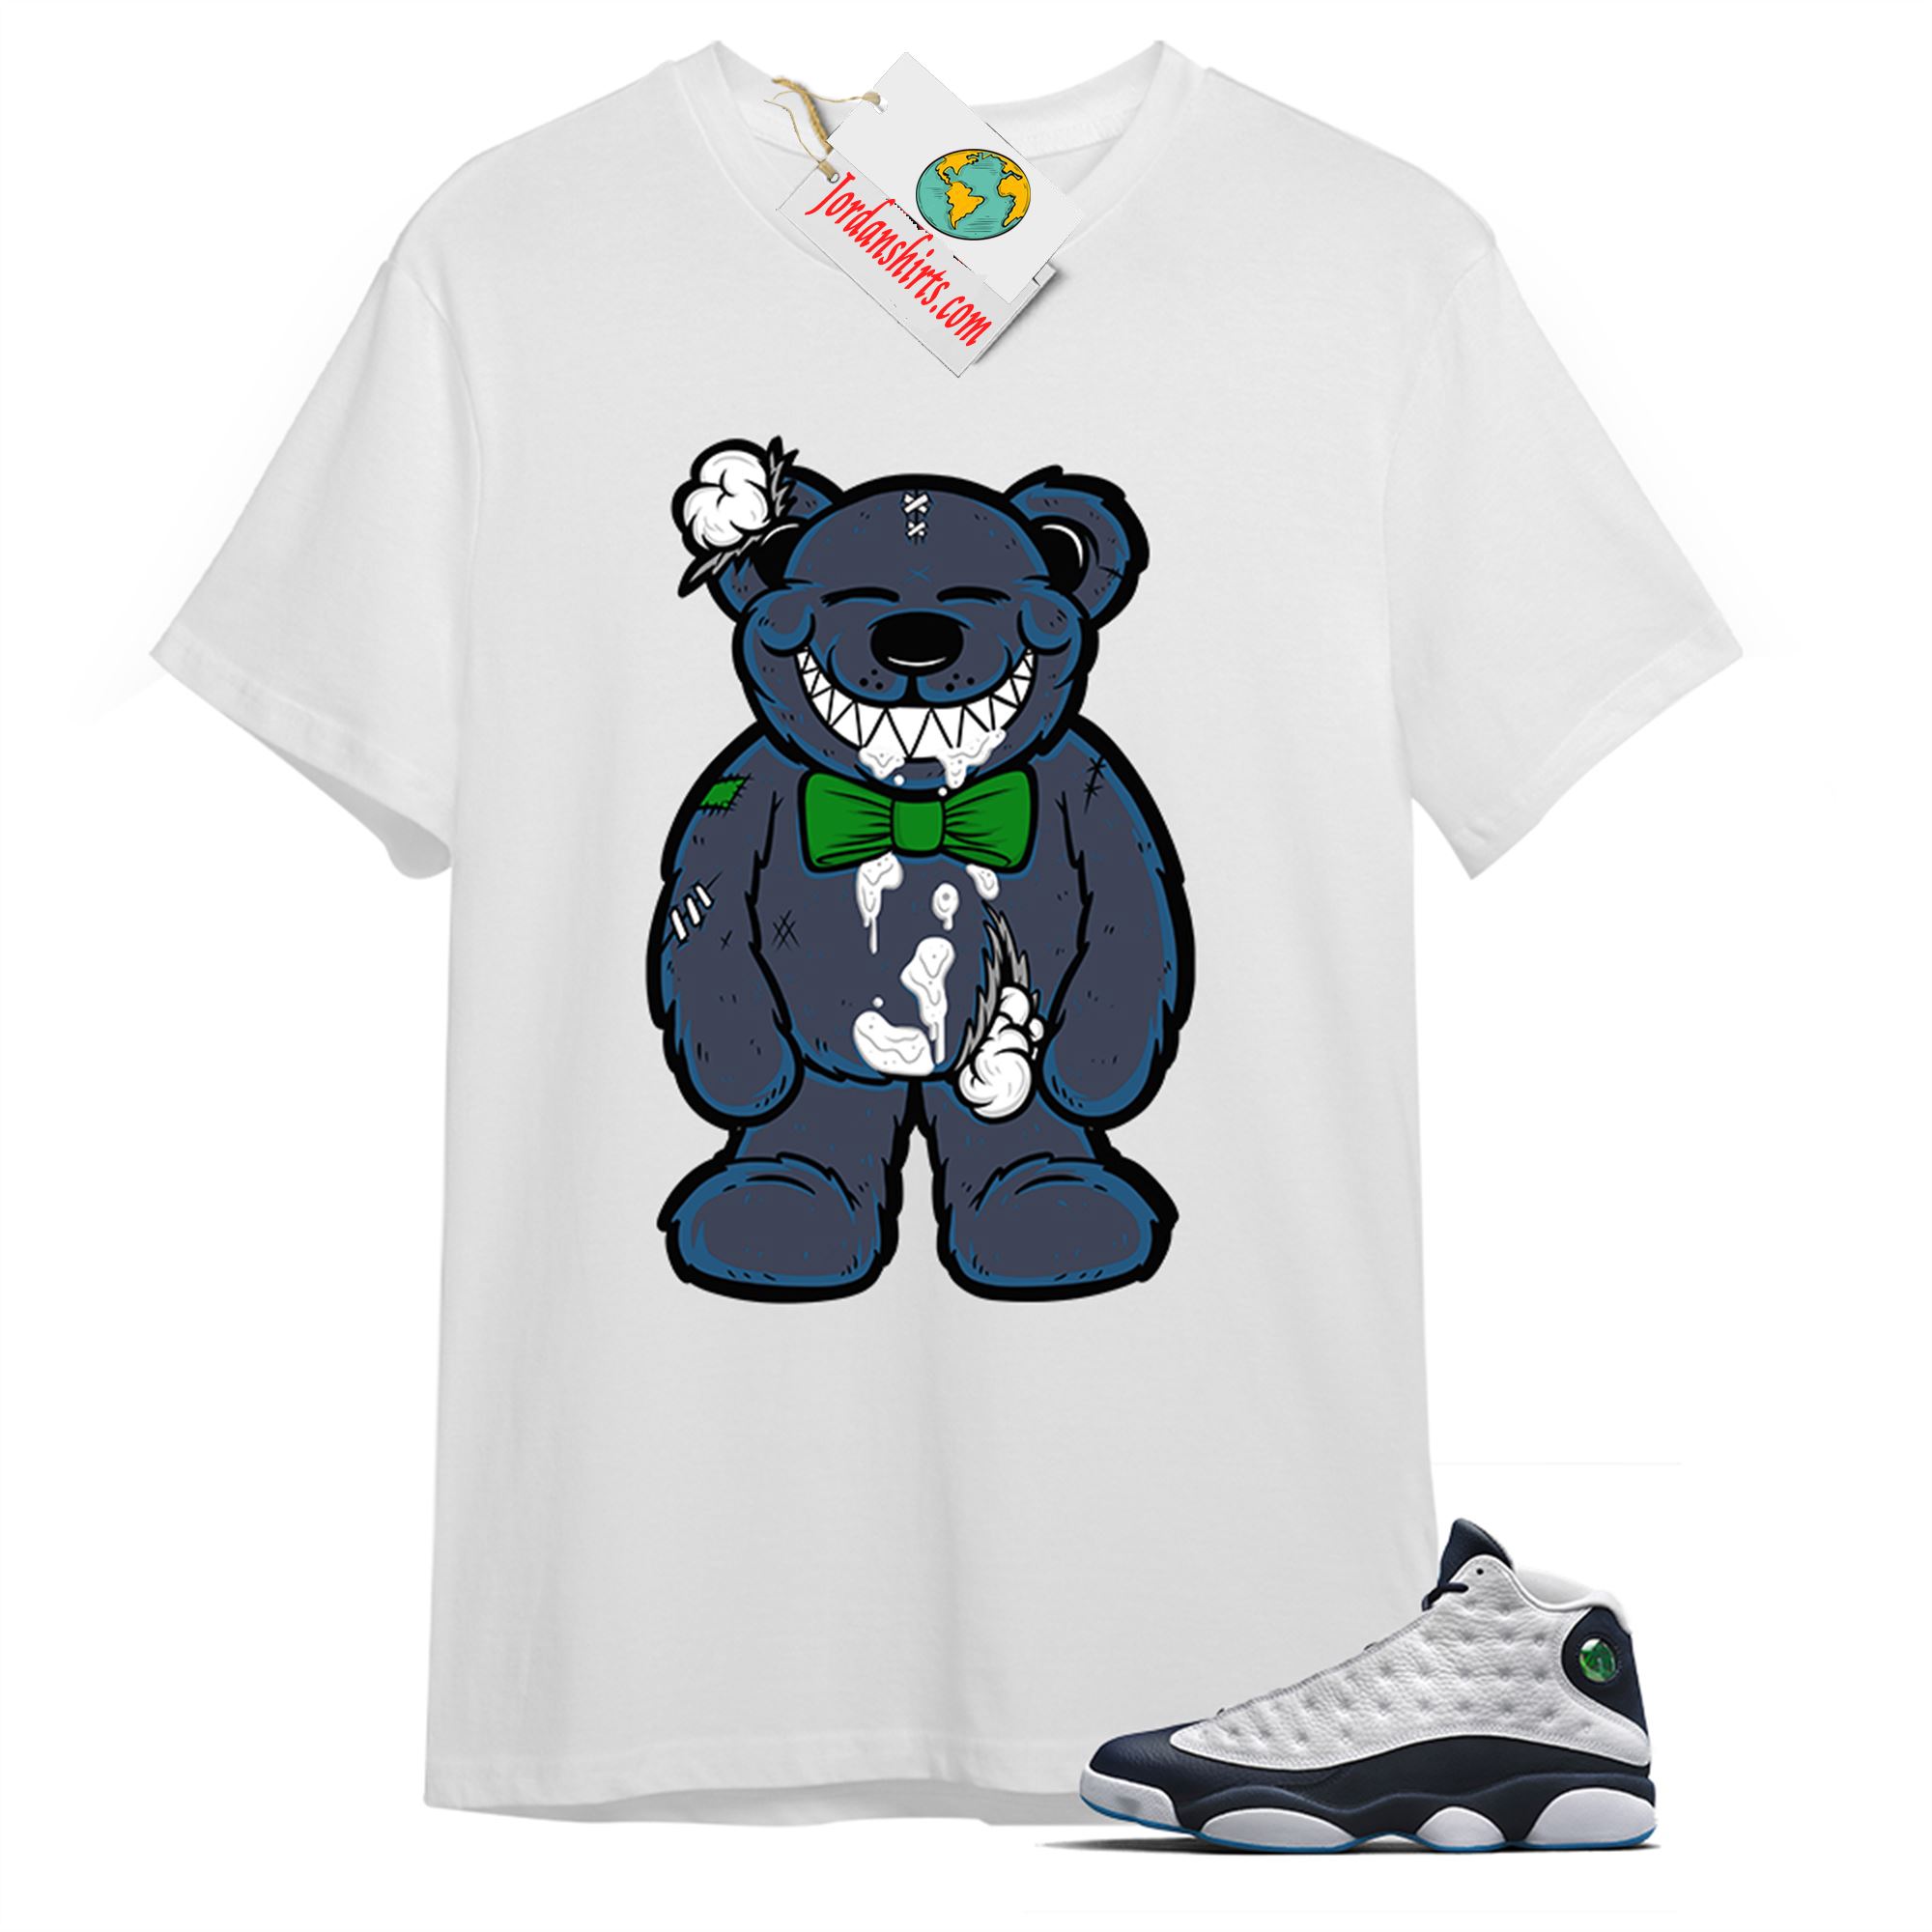 Jordan 13 Shirt, Teddy Bear Smile White T-shirt Air Jordan 13 Obsidian 13s Size Up To 5xl